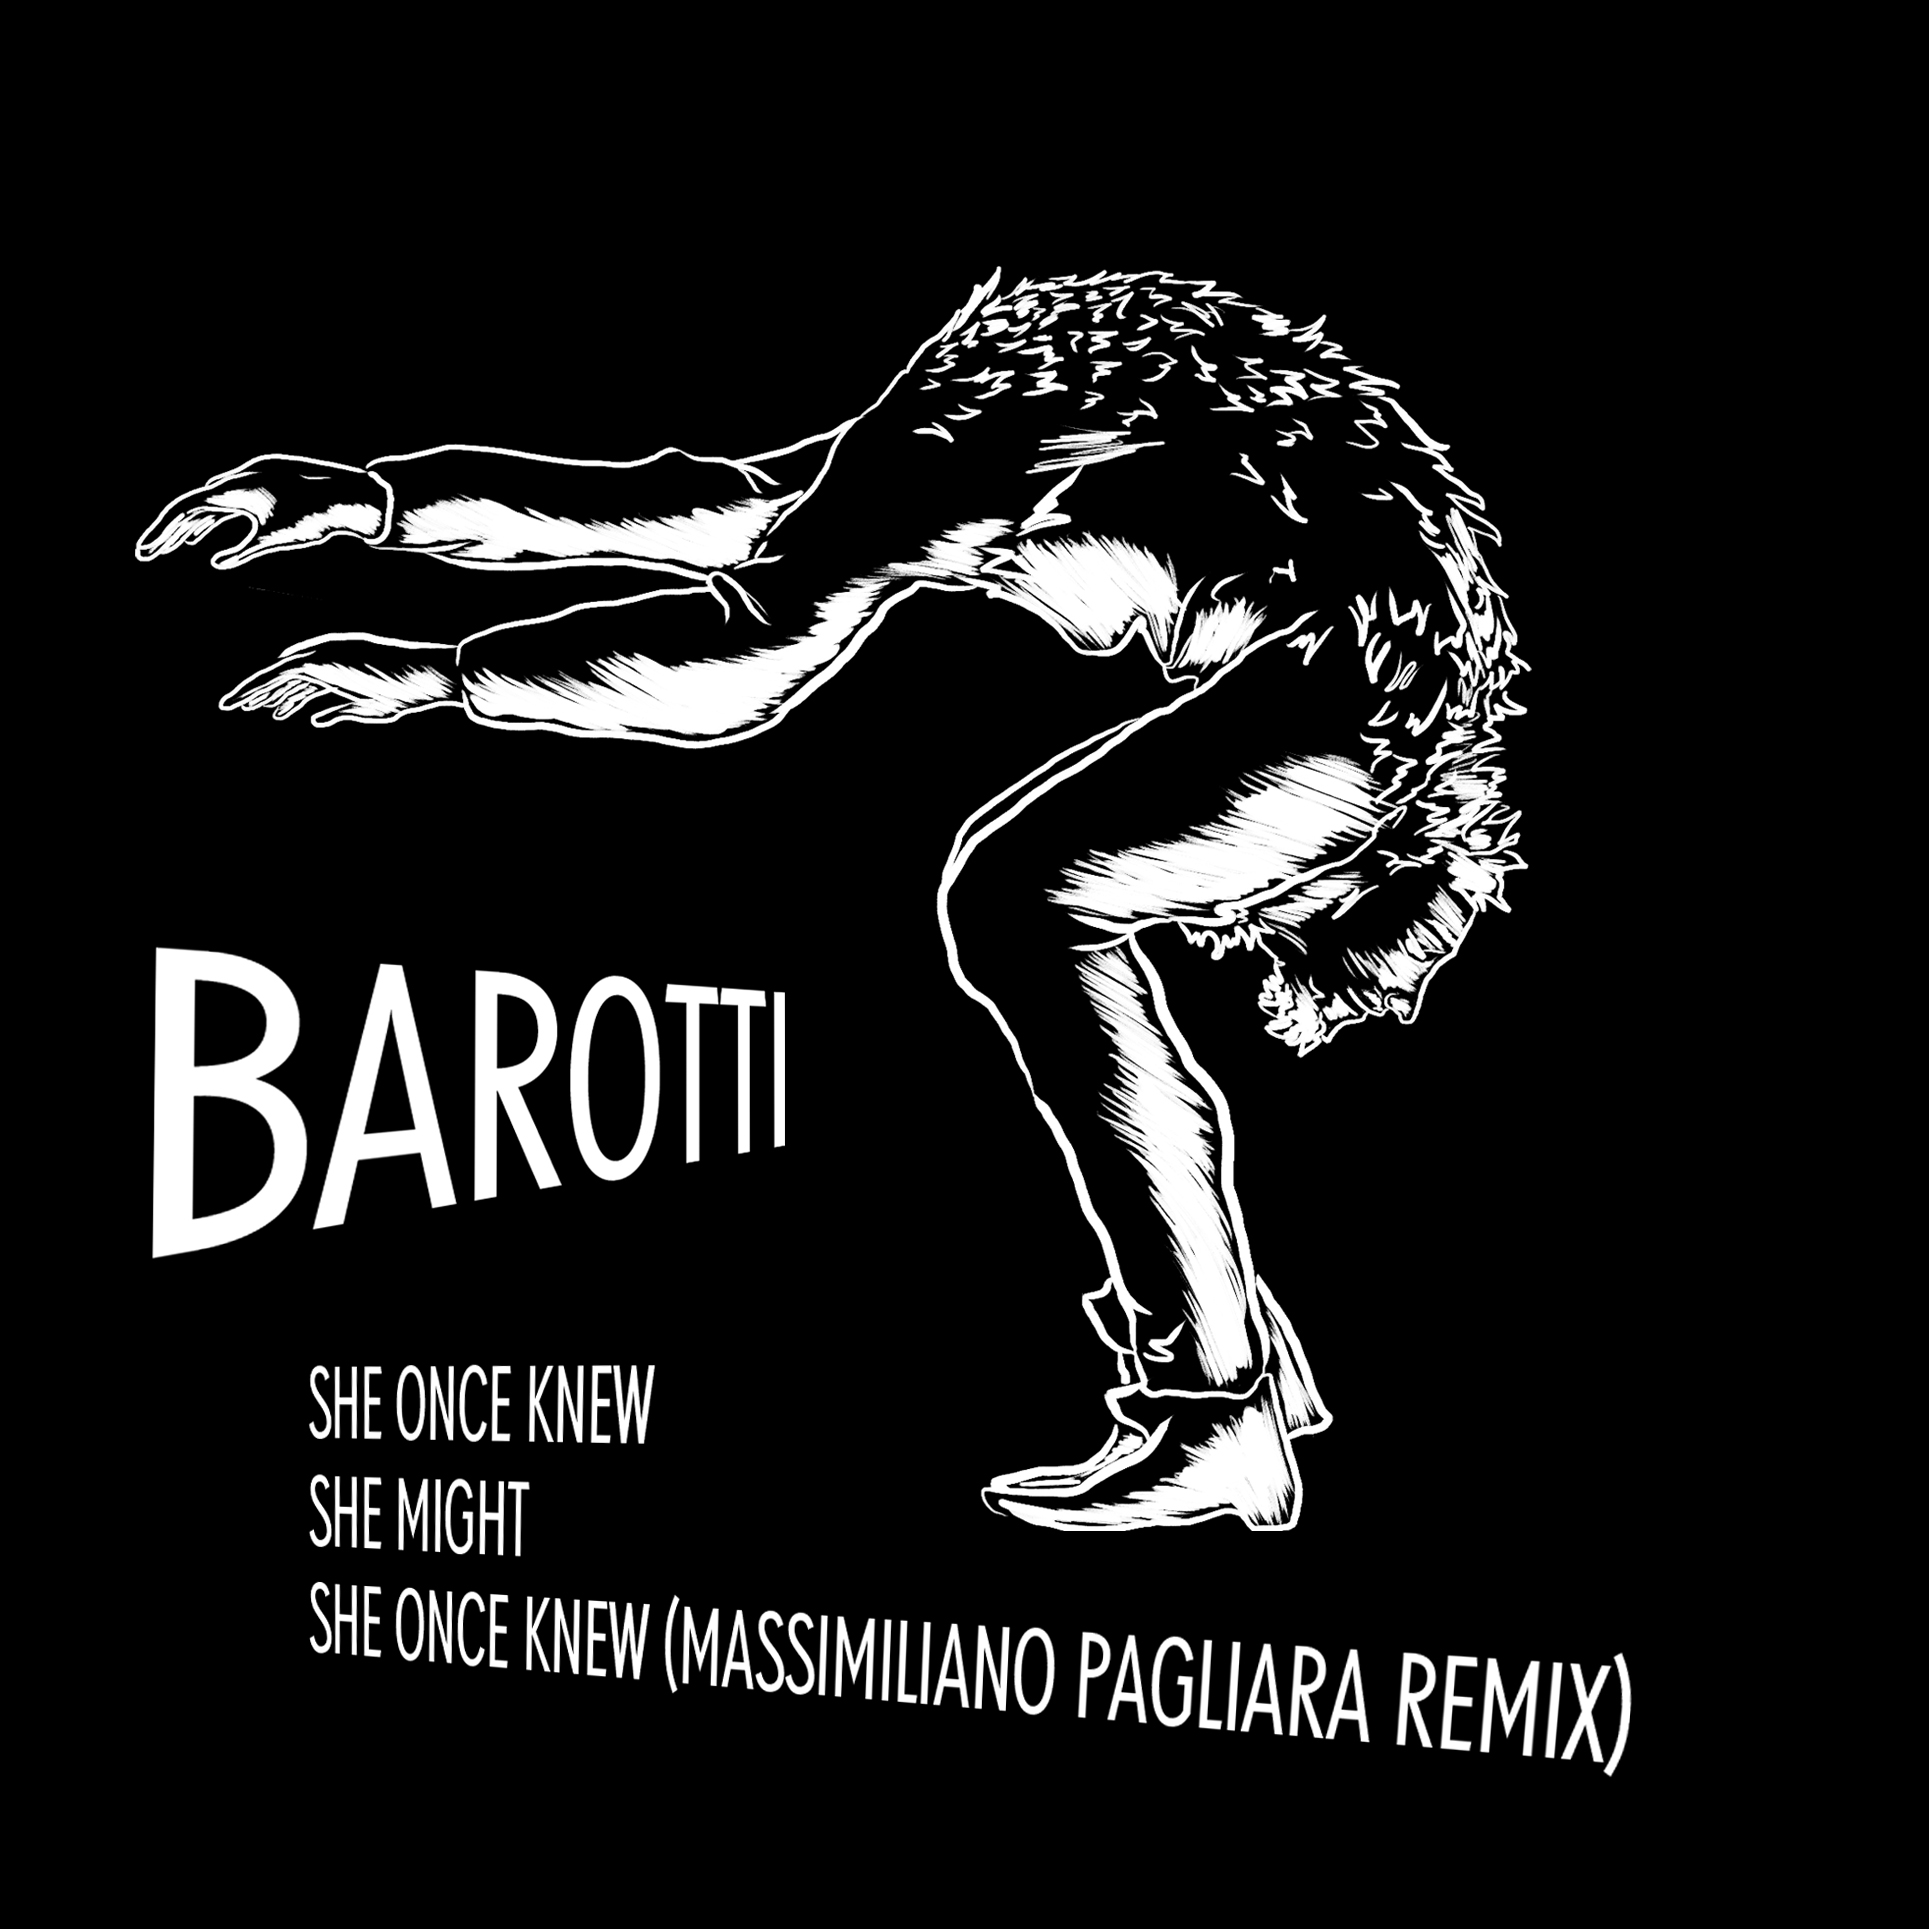 Premiere: Stream Barotti's “She Once Knew”